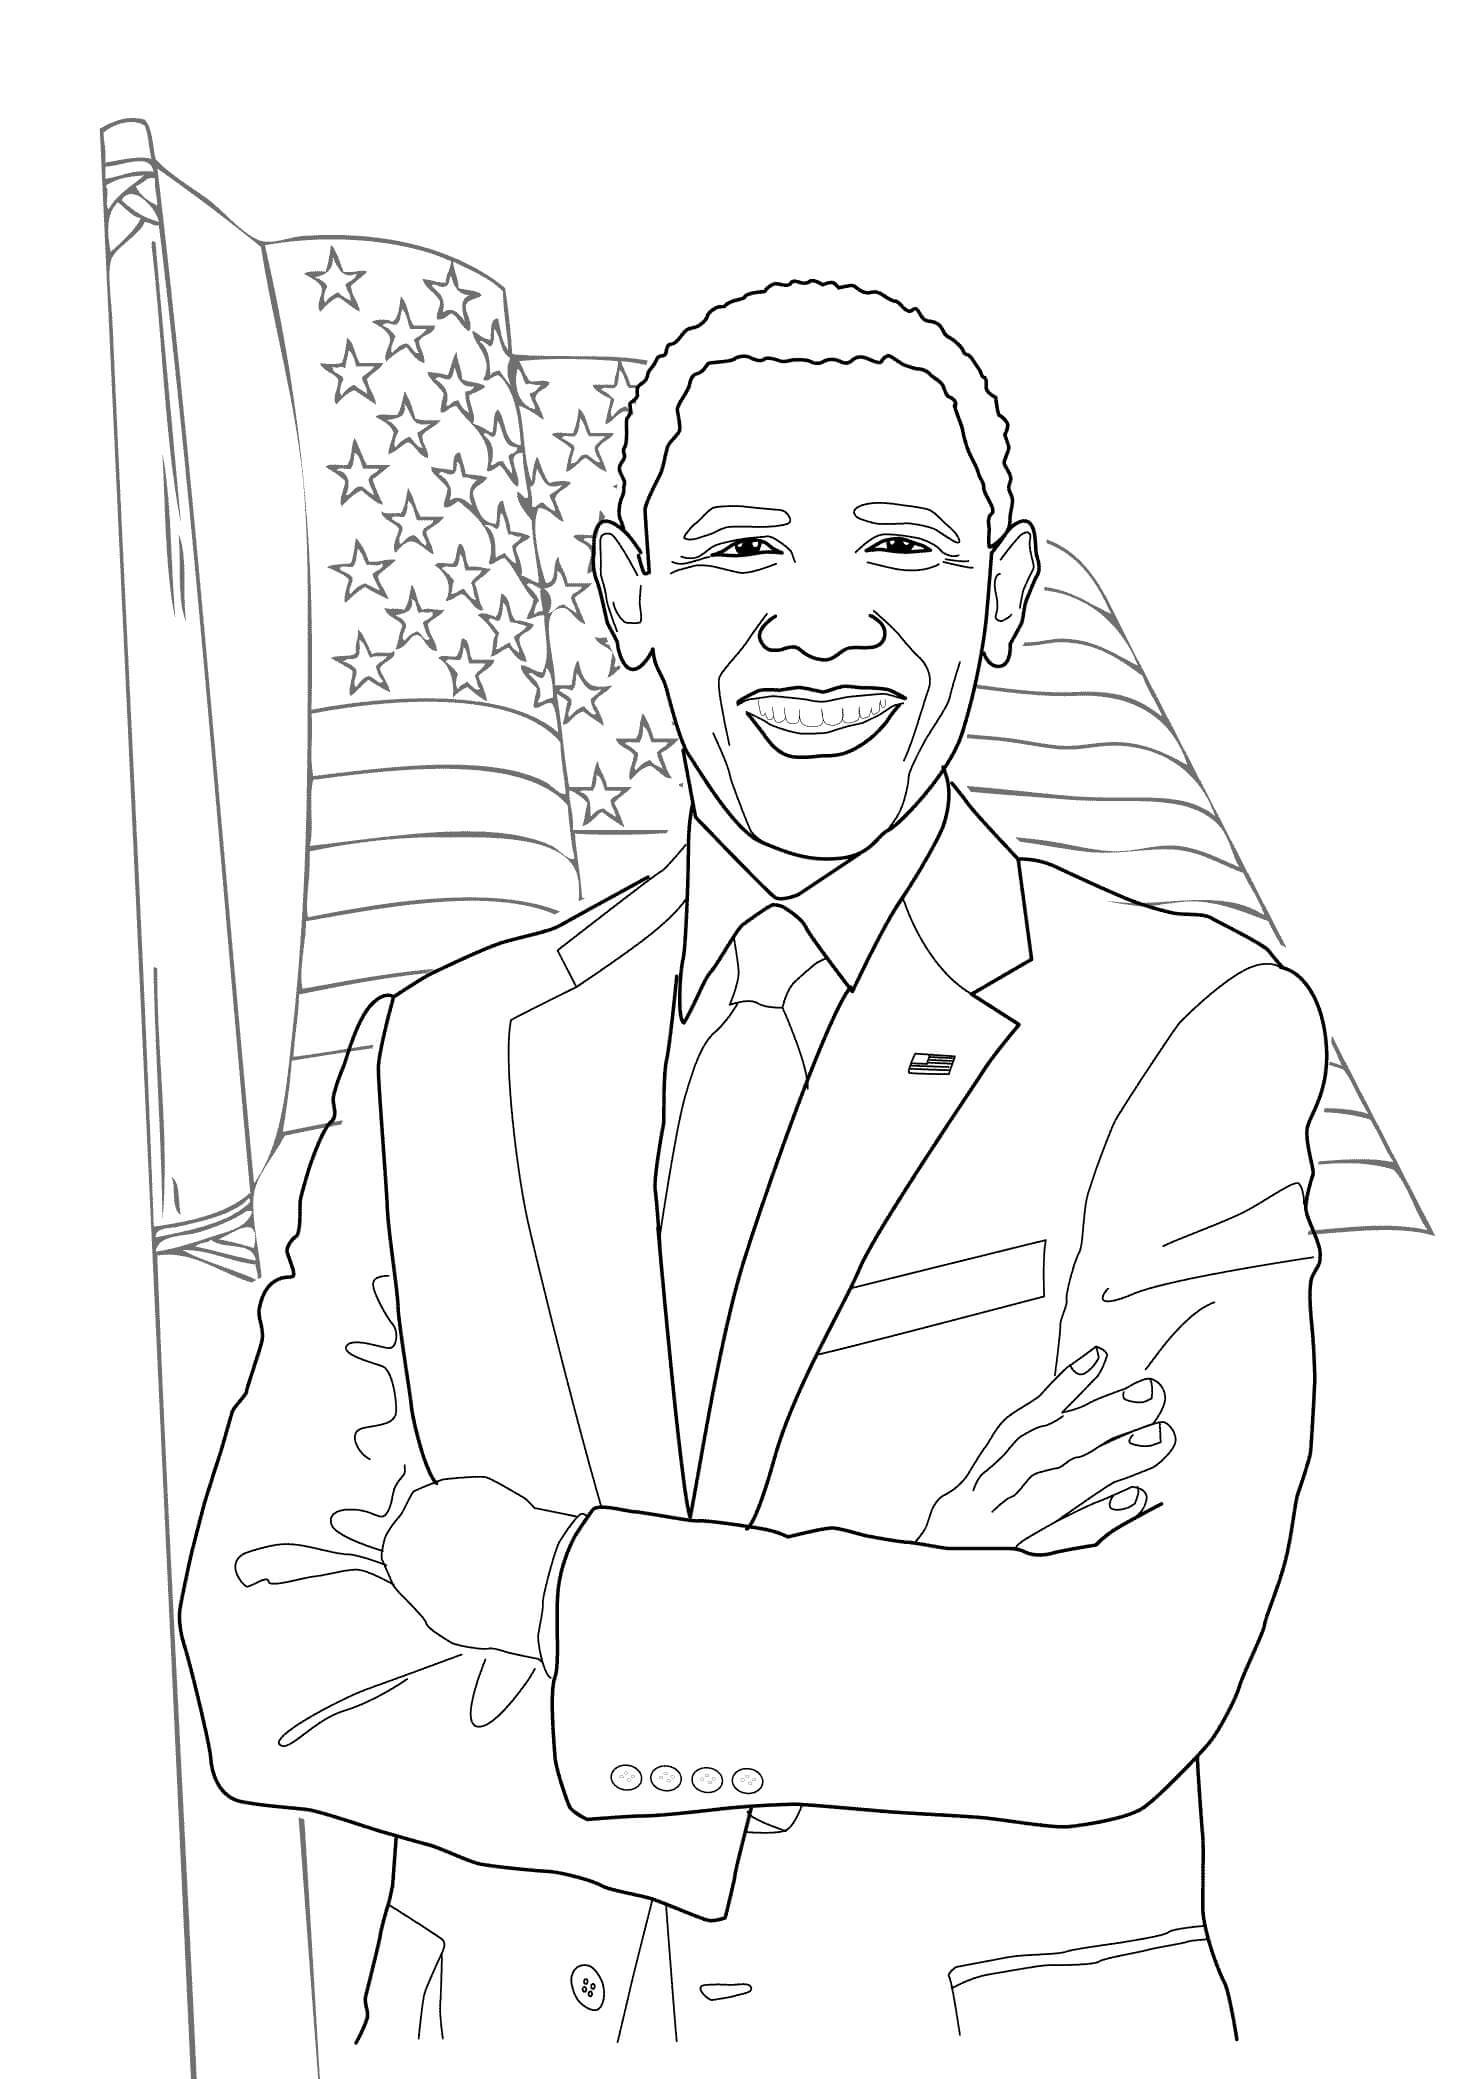 Pret Obama met de Vlag van Amerika